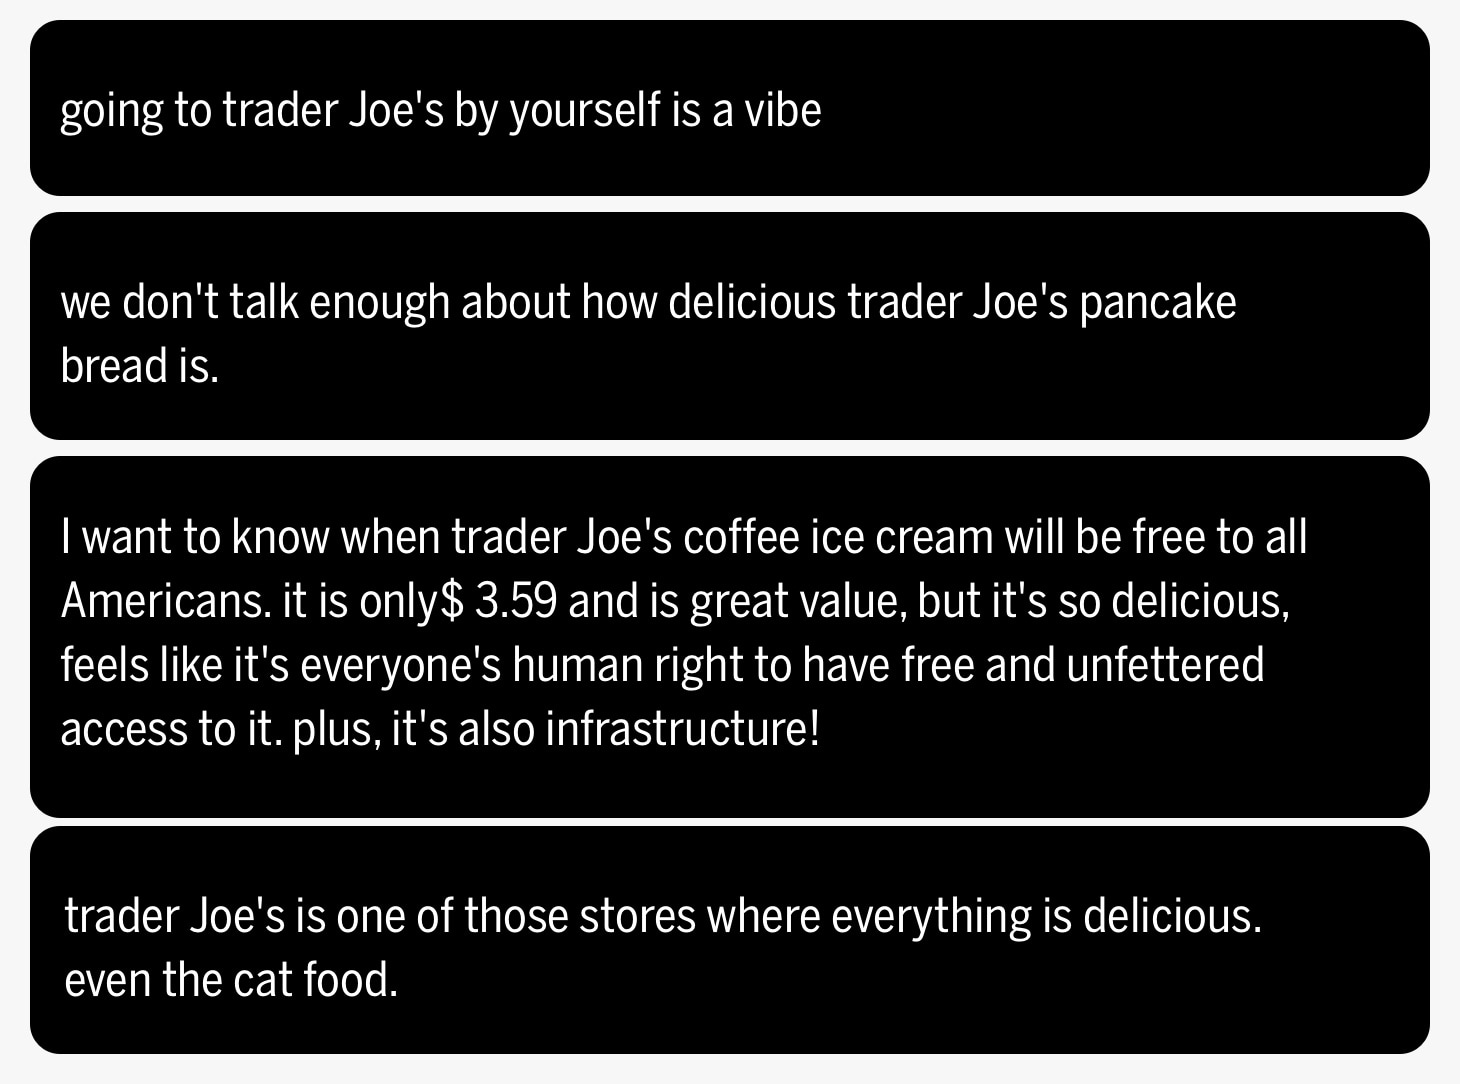 Tweets about Trader Joe's